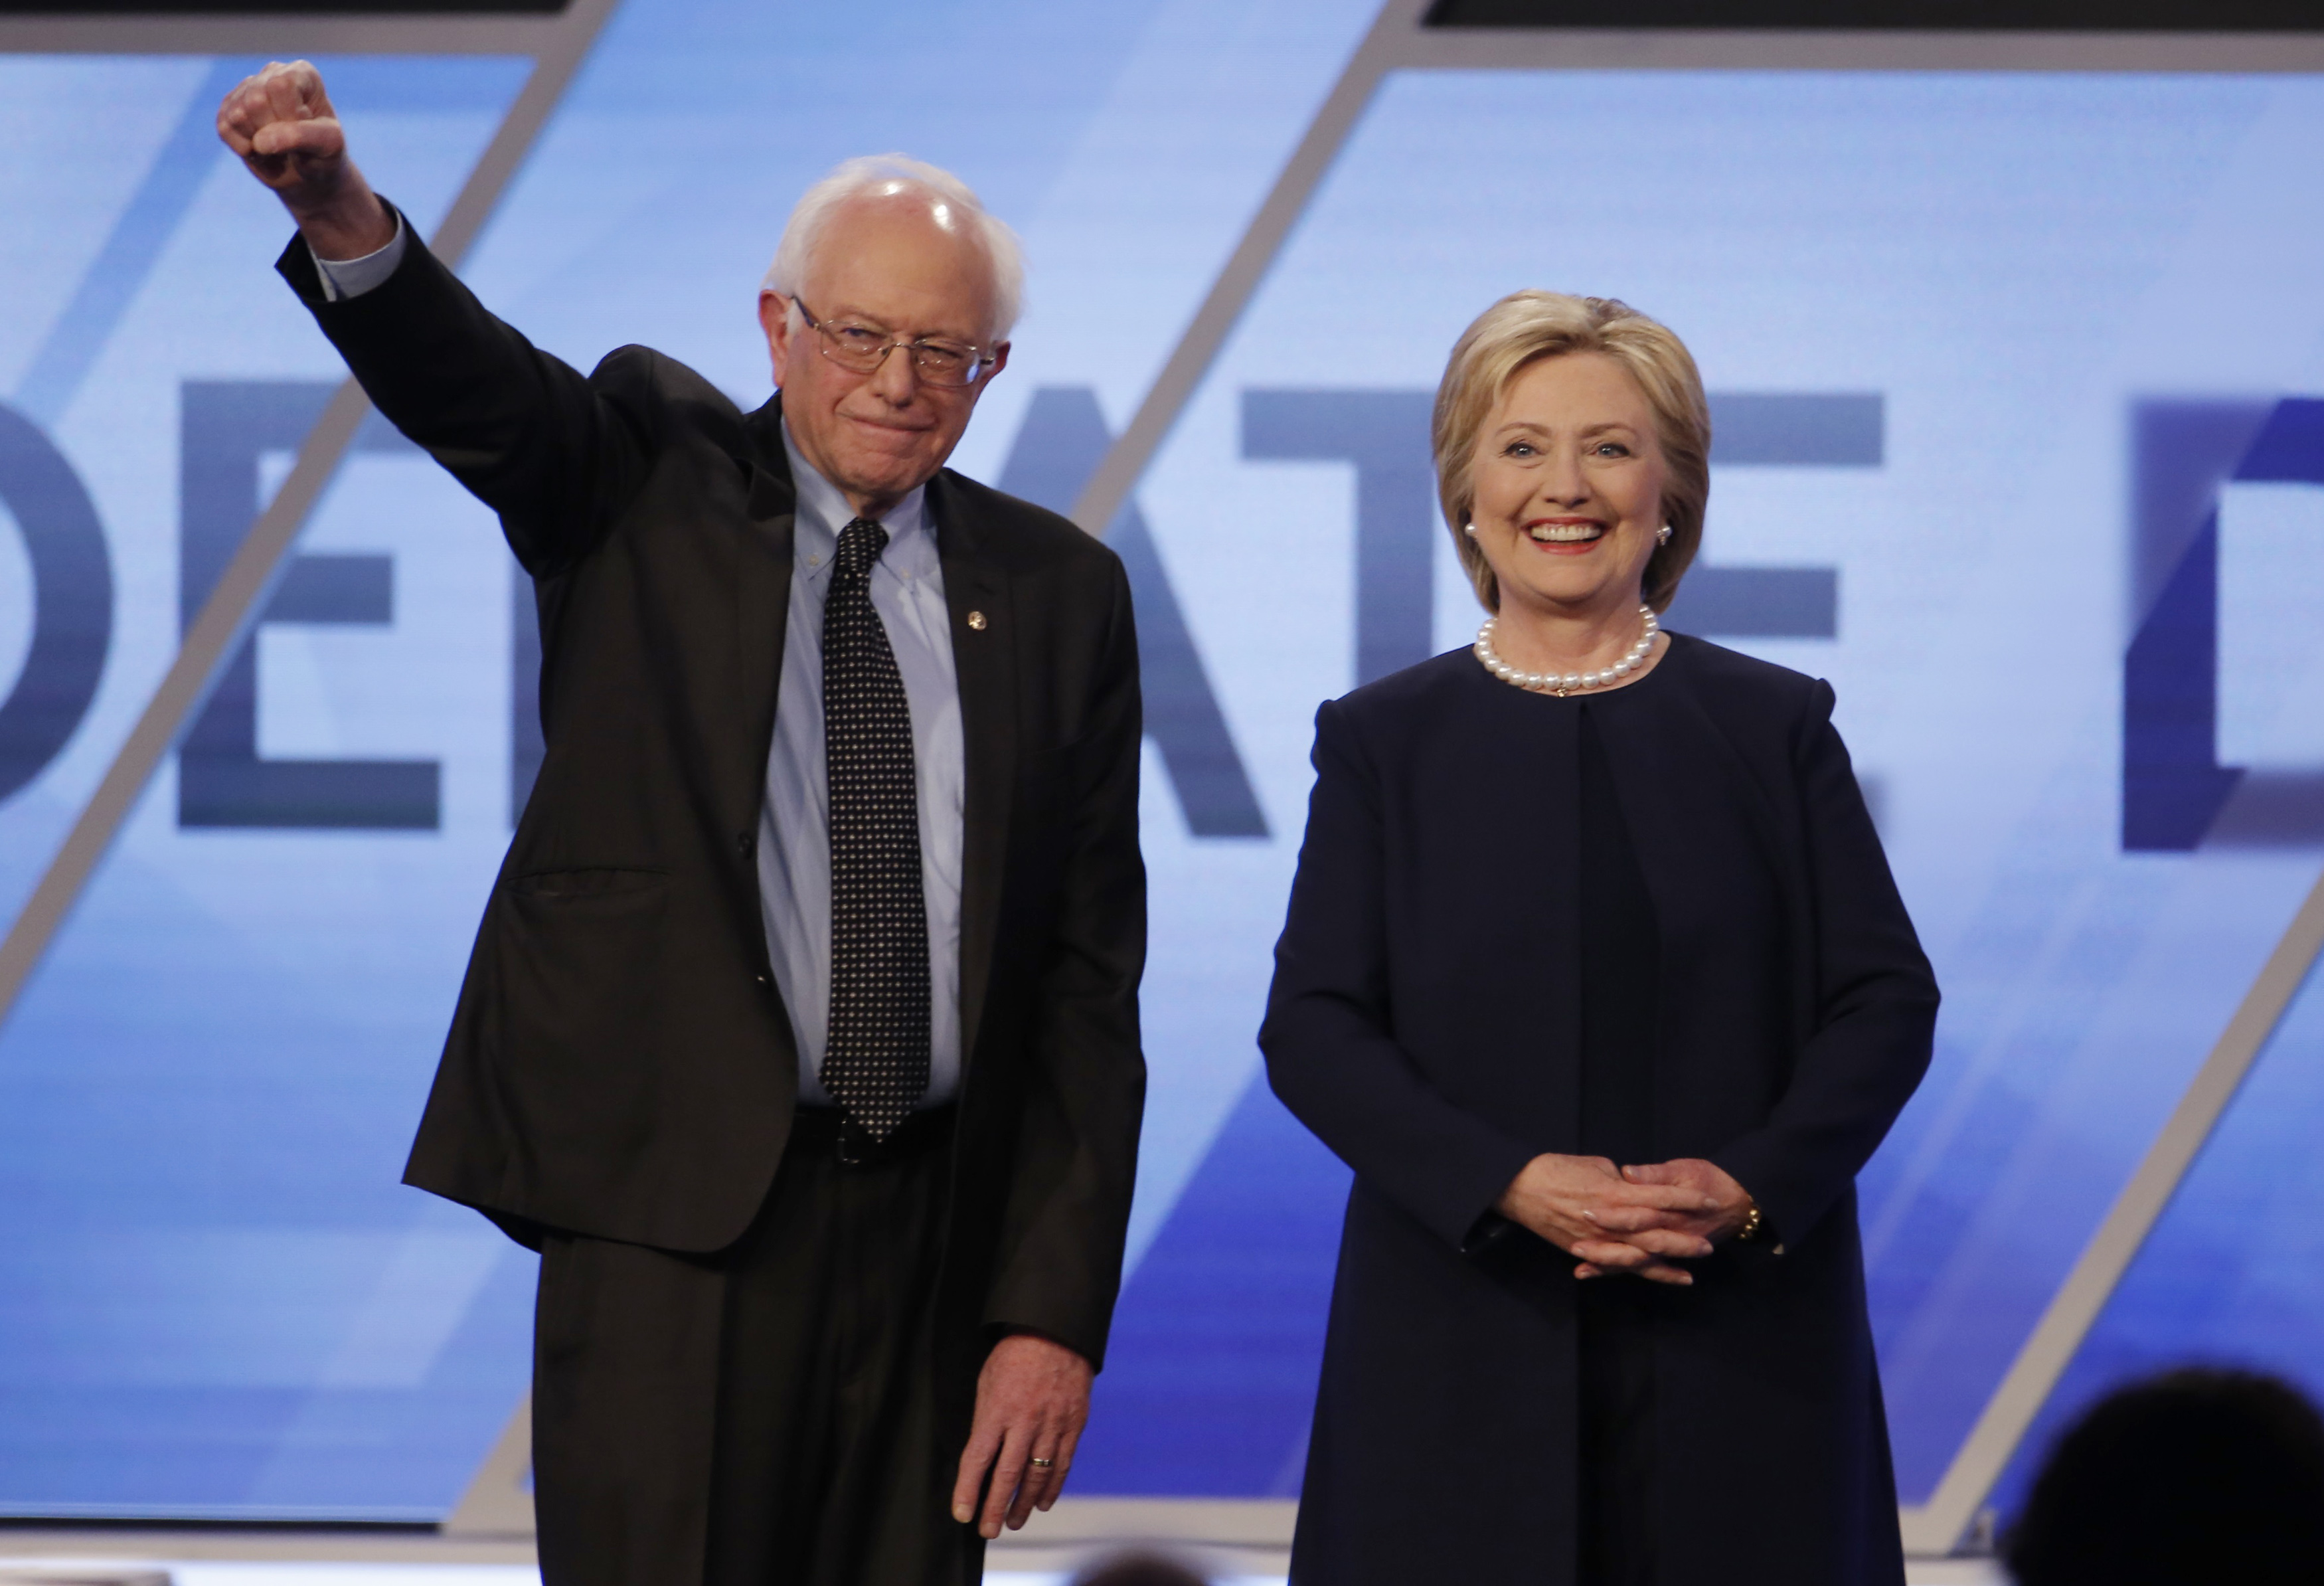 Hillary Clinton 2008 vs. Bernie Sanders 2016: Whose rhetoric is harsher? - CBS News